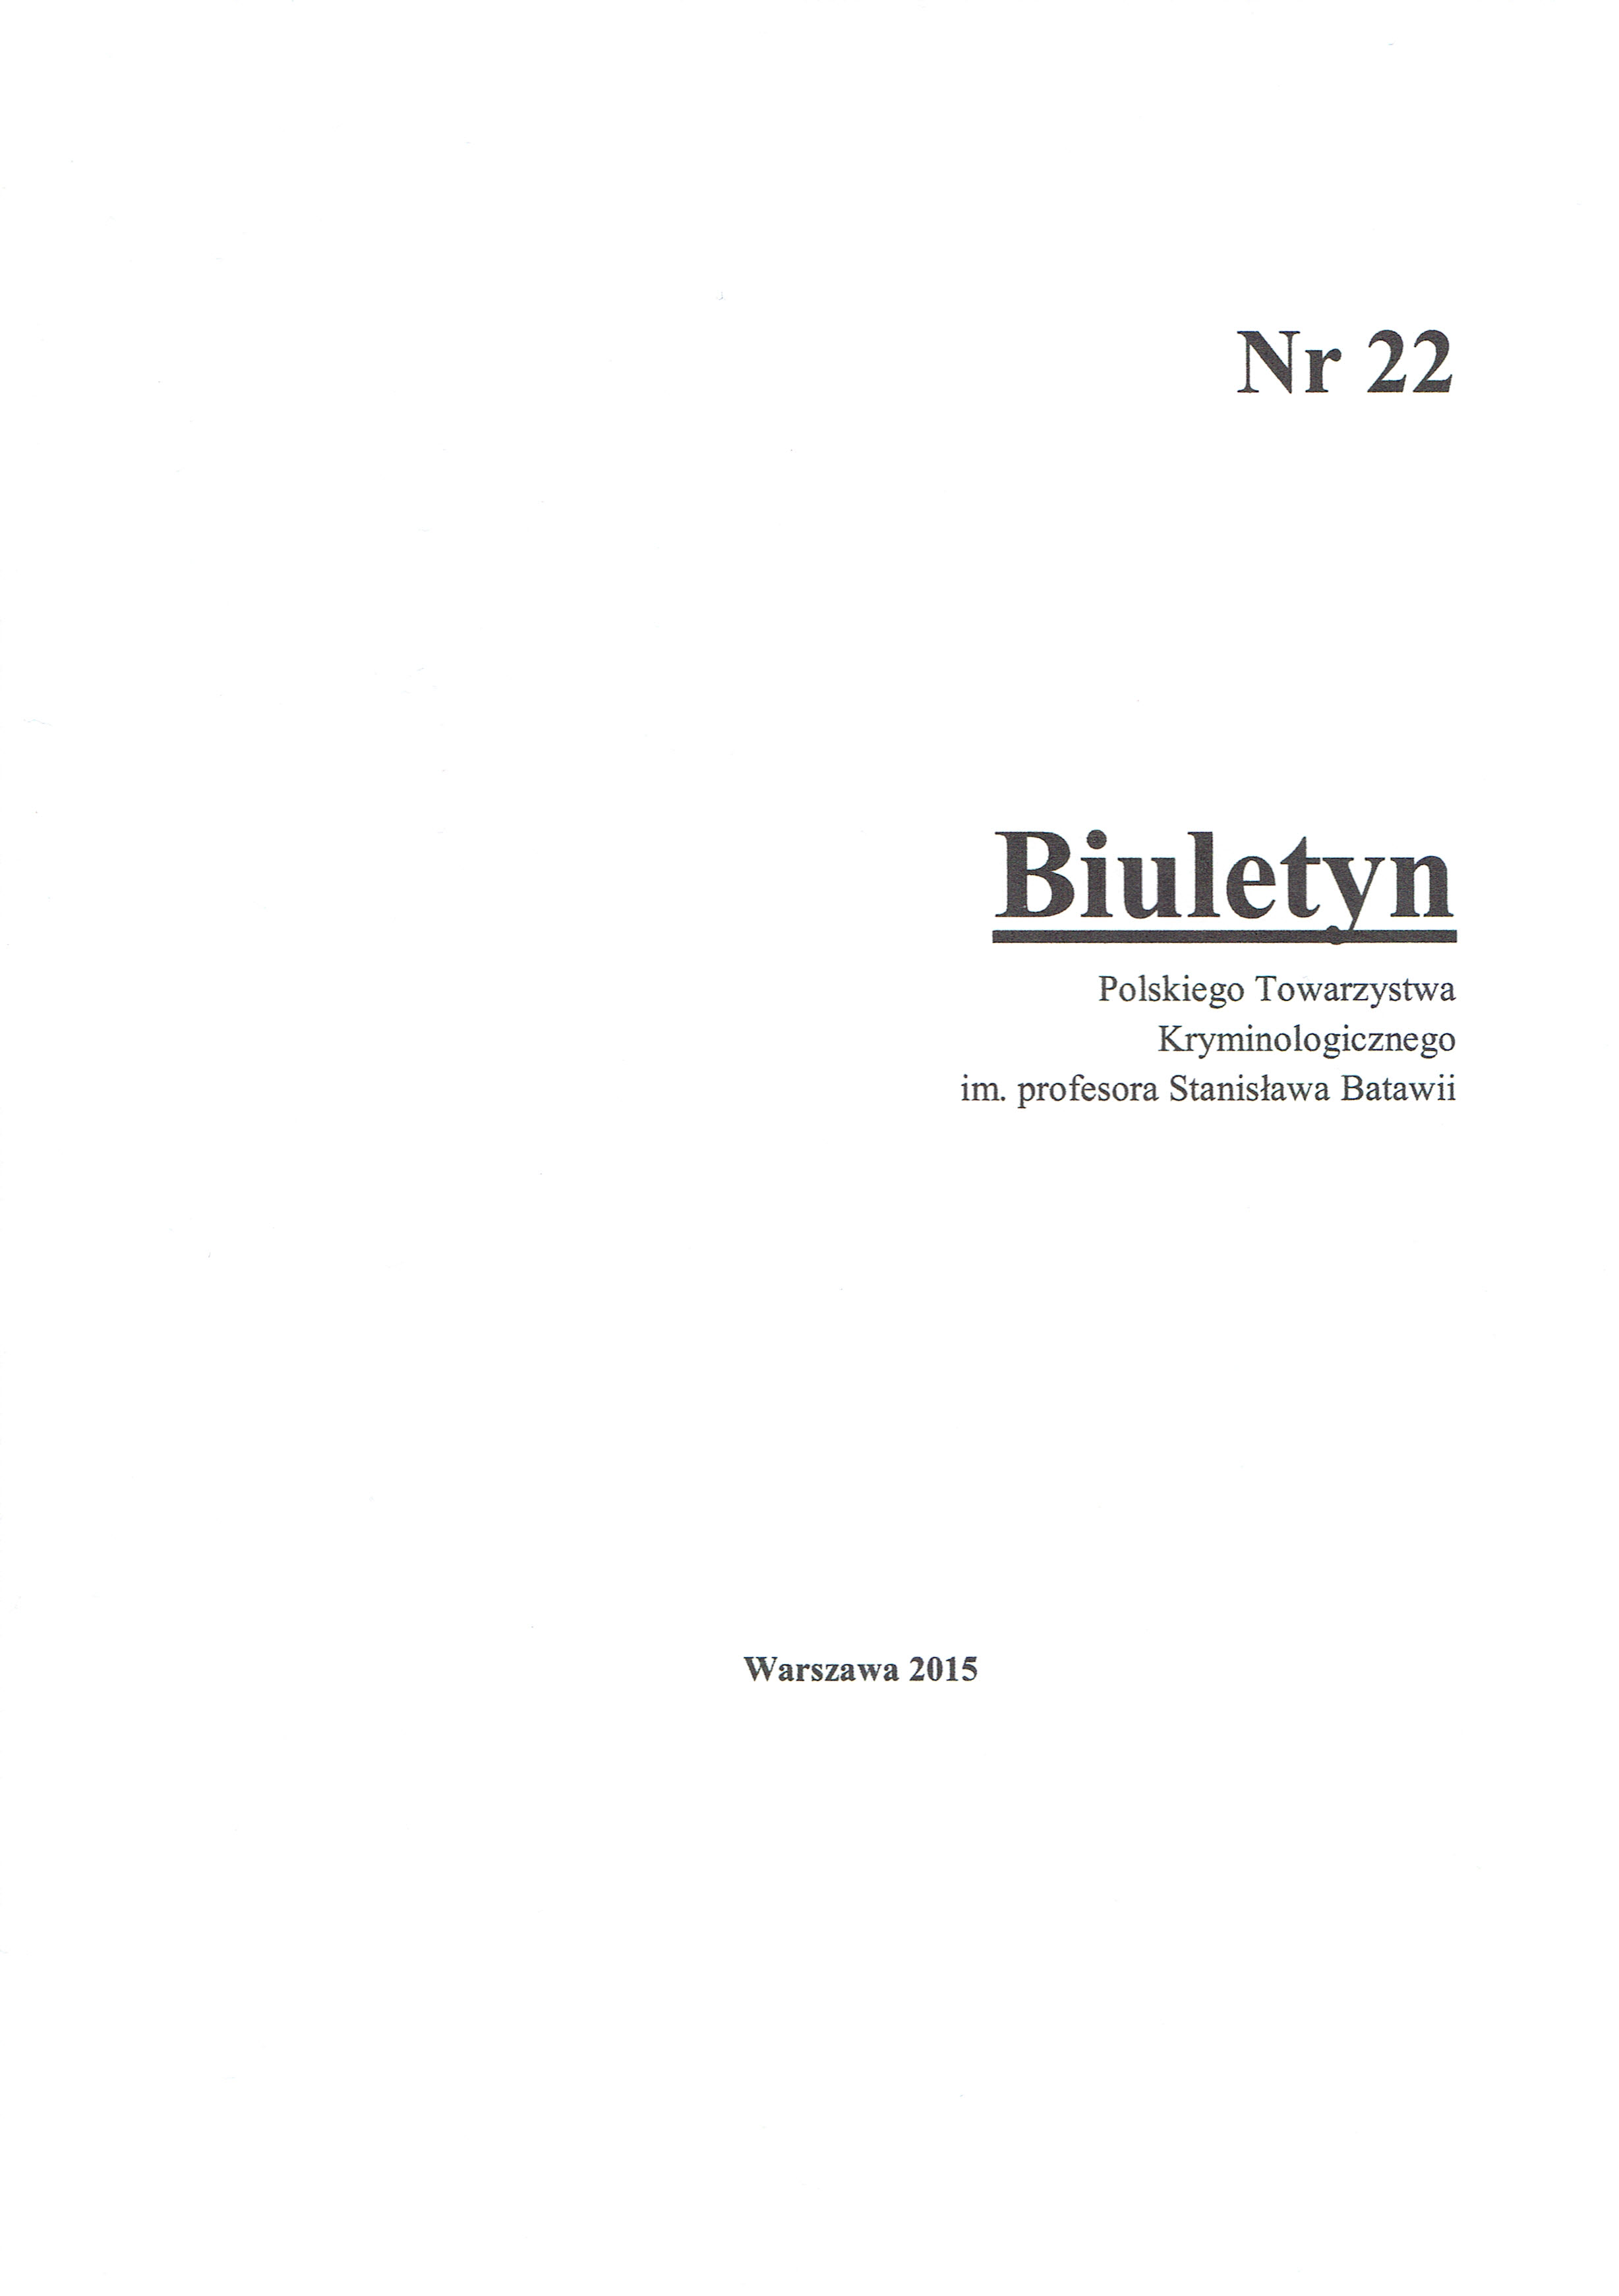 Bulletin of the prof. Stanisław Batawia’ Polish Society of Criminology